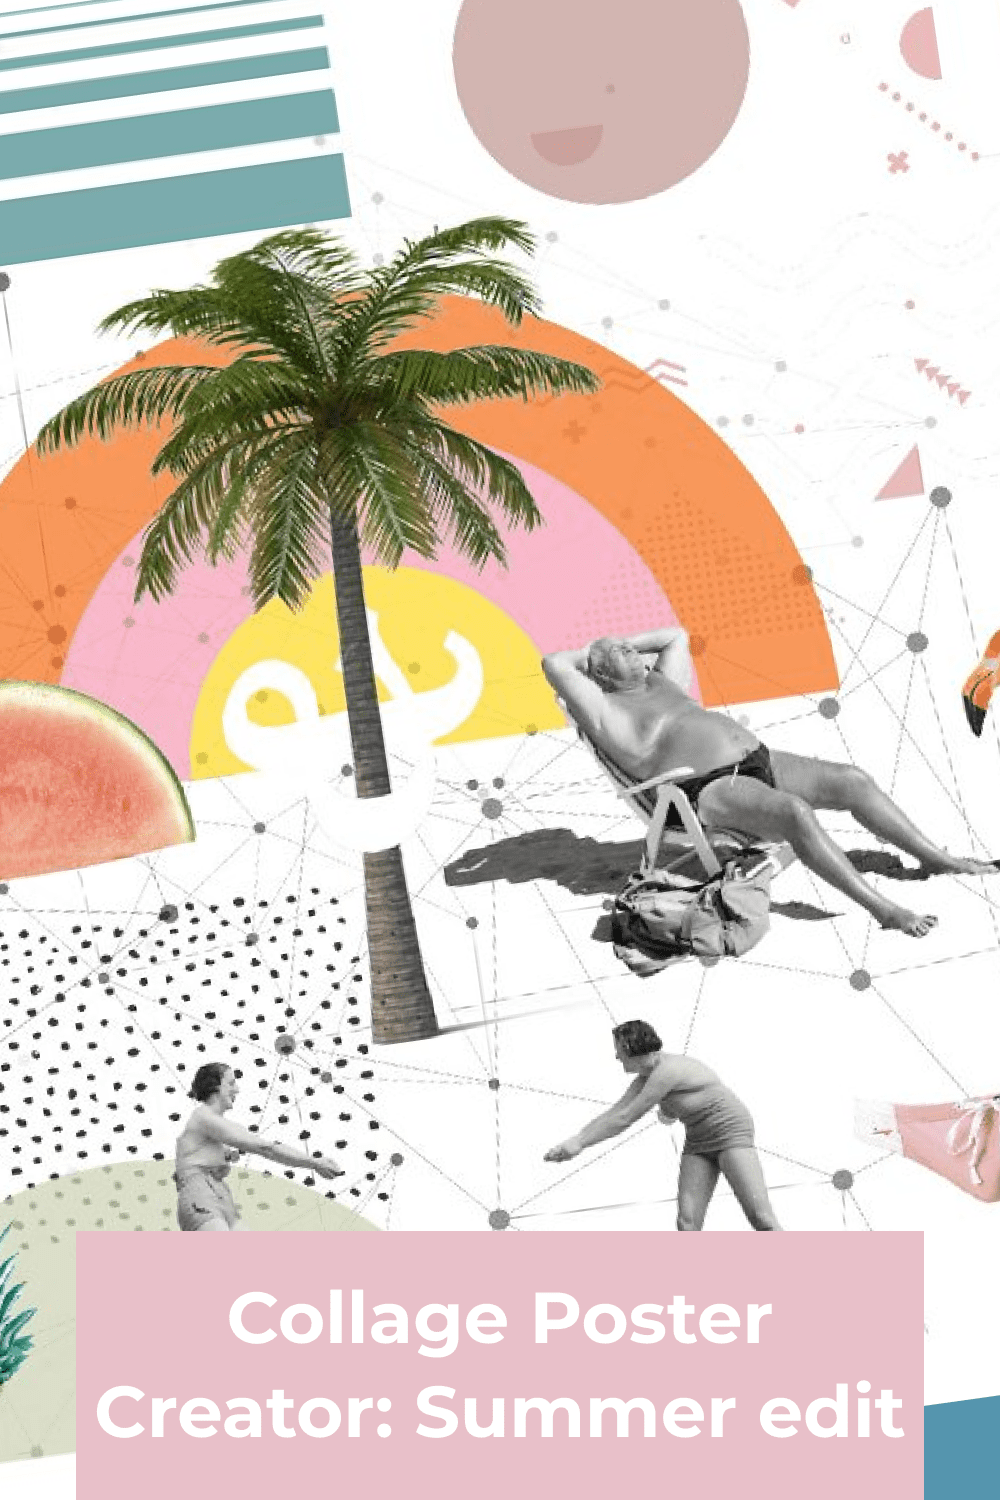 Collage Poster Creator Summer edit pinterest image.